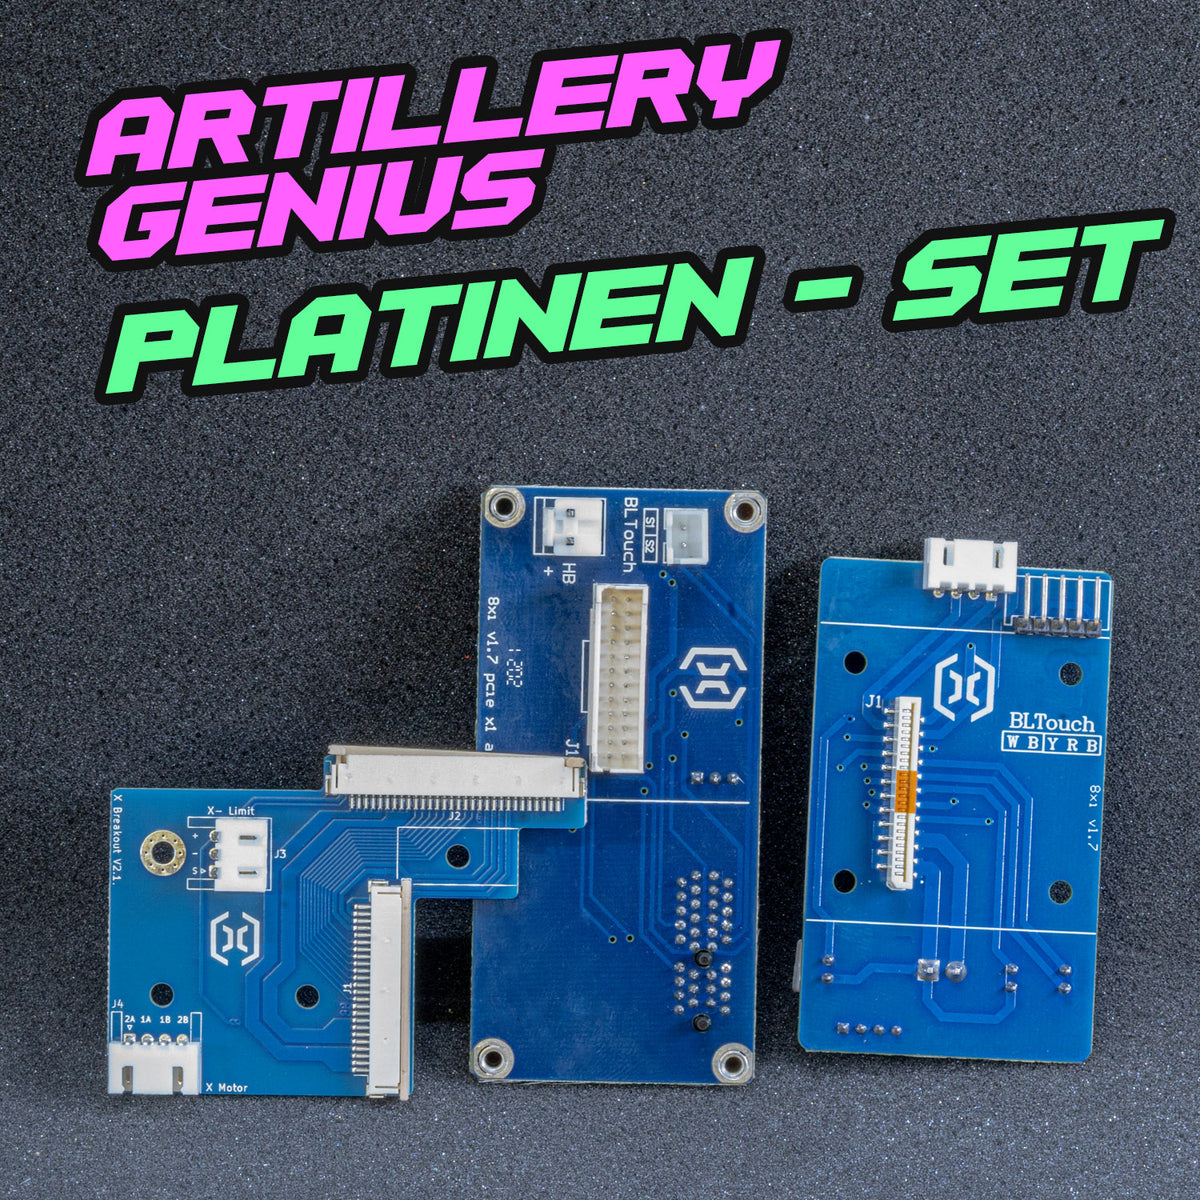 Artillery Genius Platinen-Set